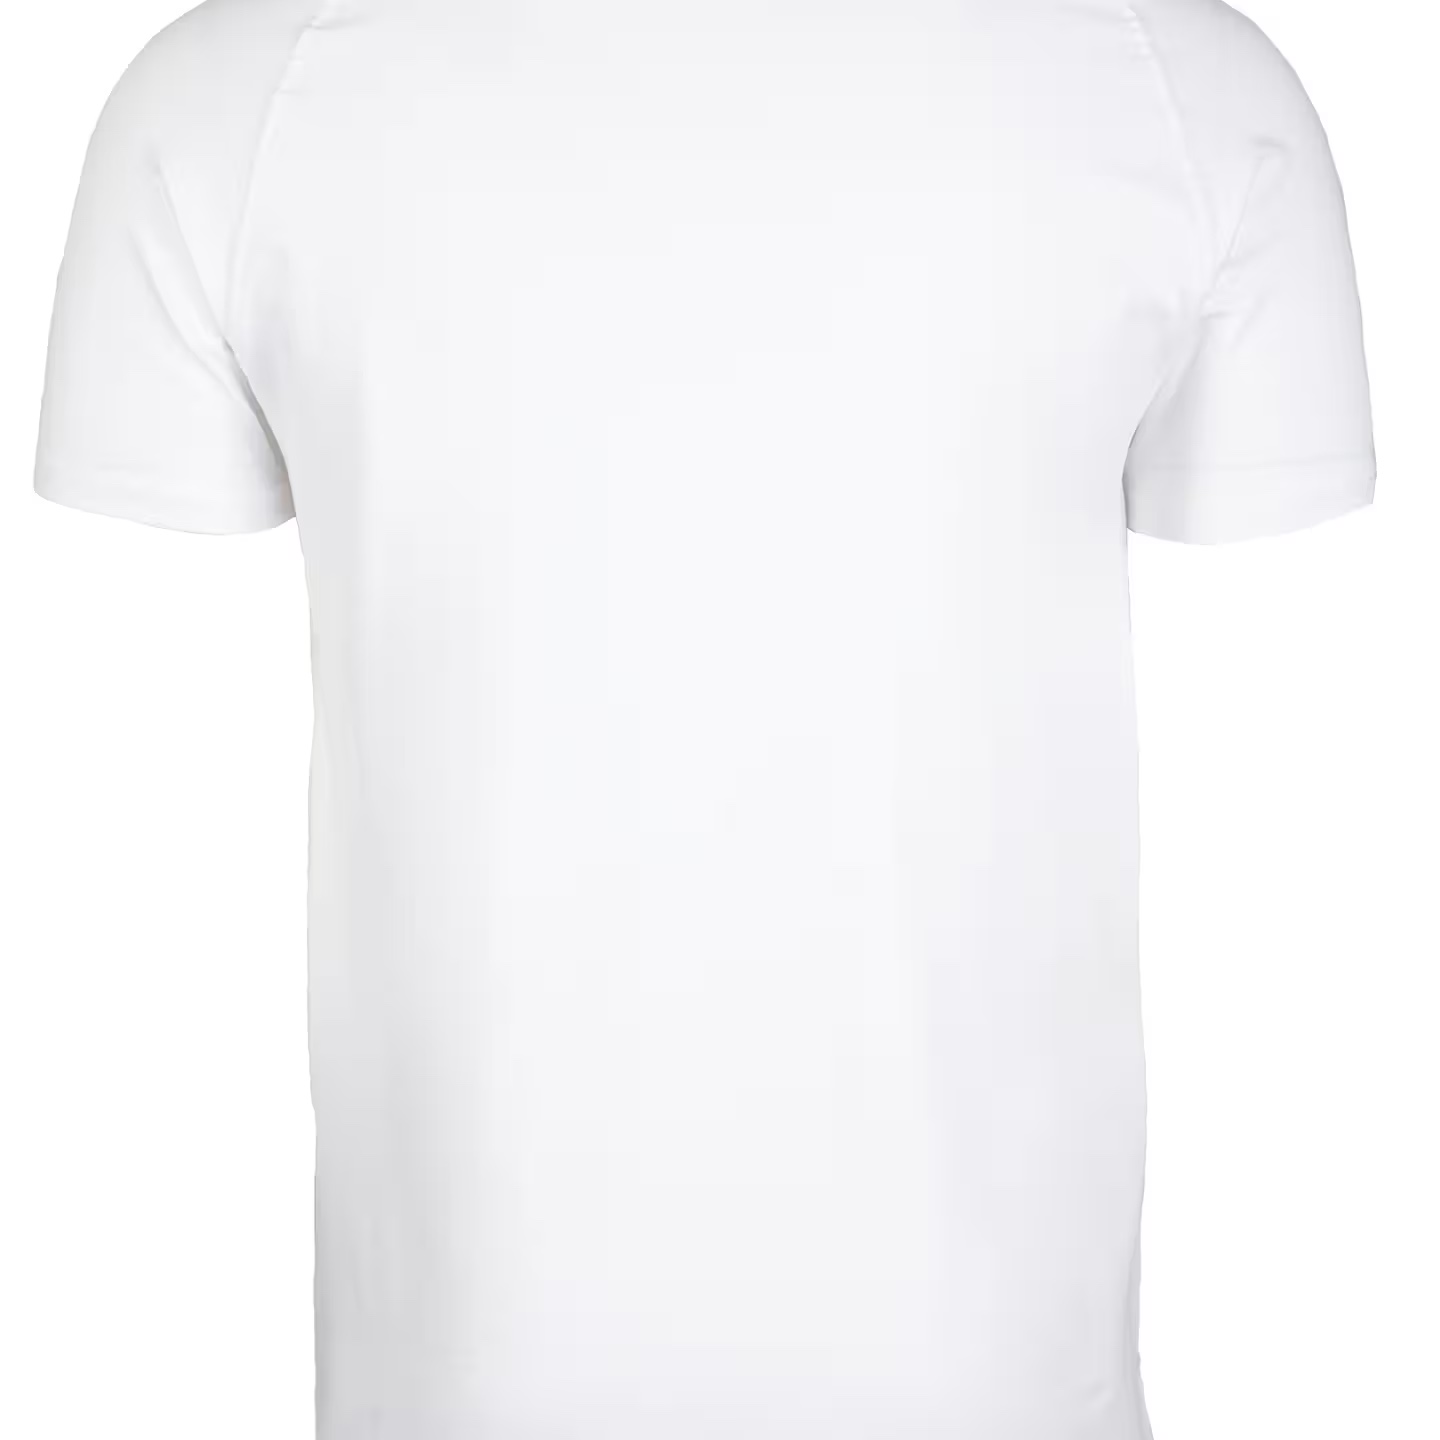 Gorilla wear - Davis T-shirt, white